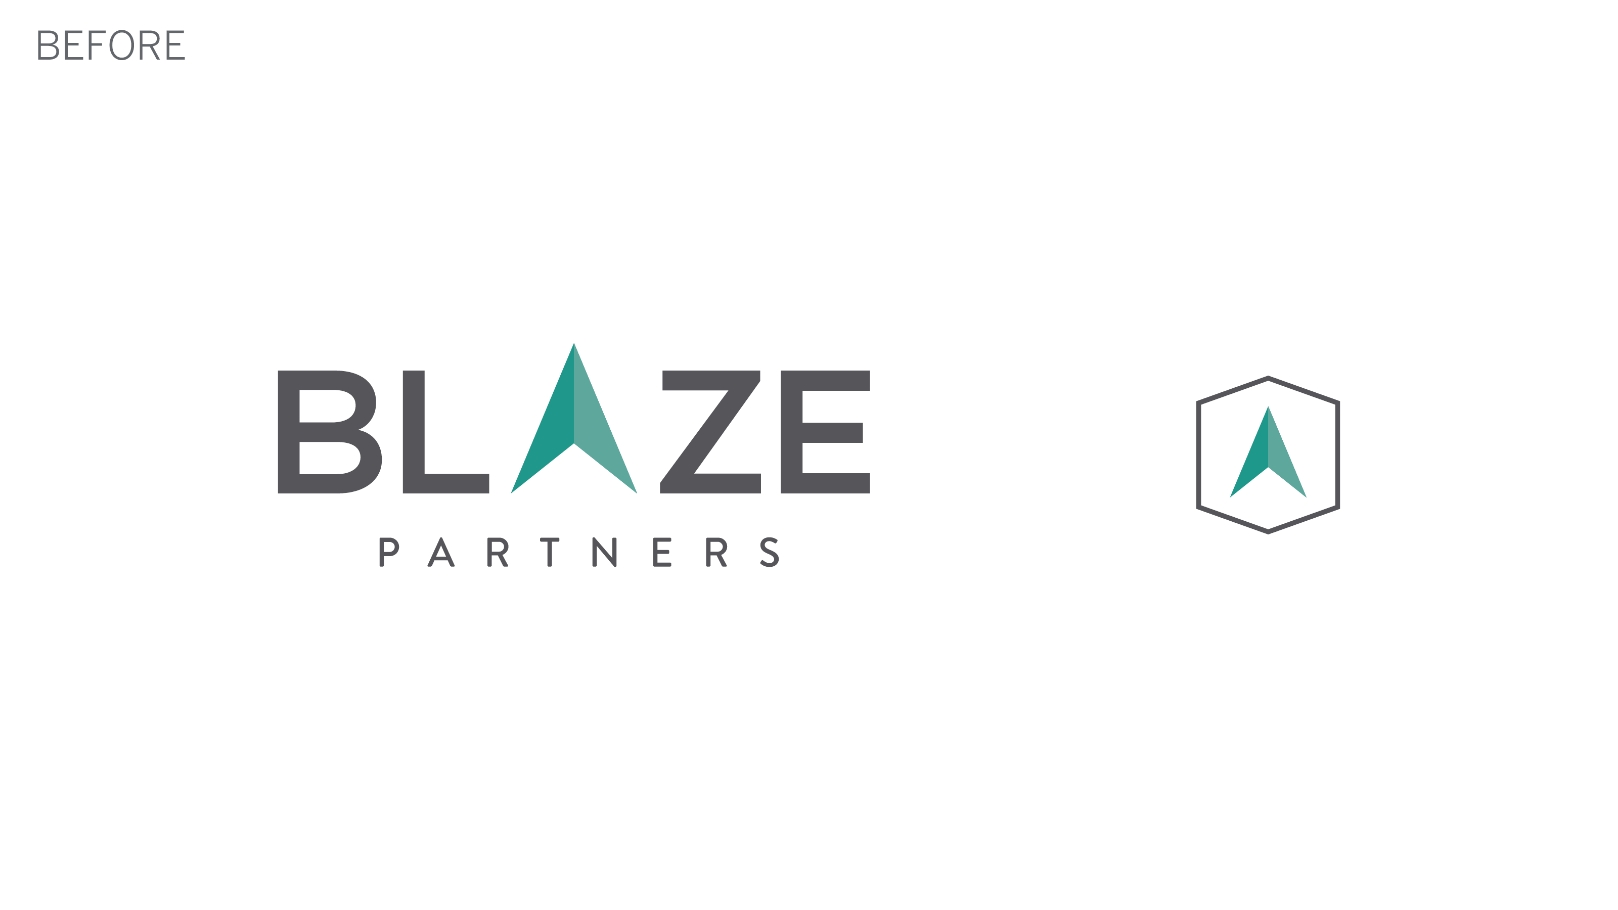 Blaze Partners redesign